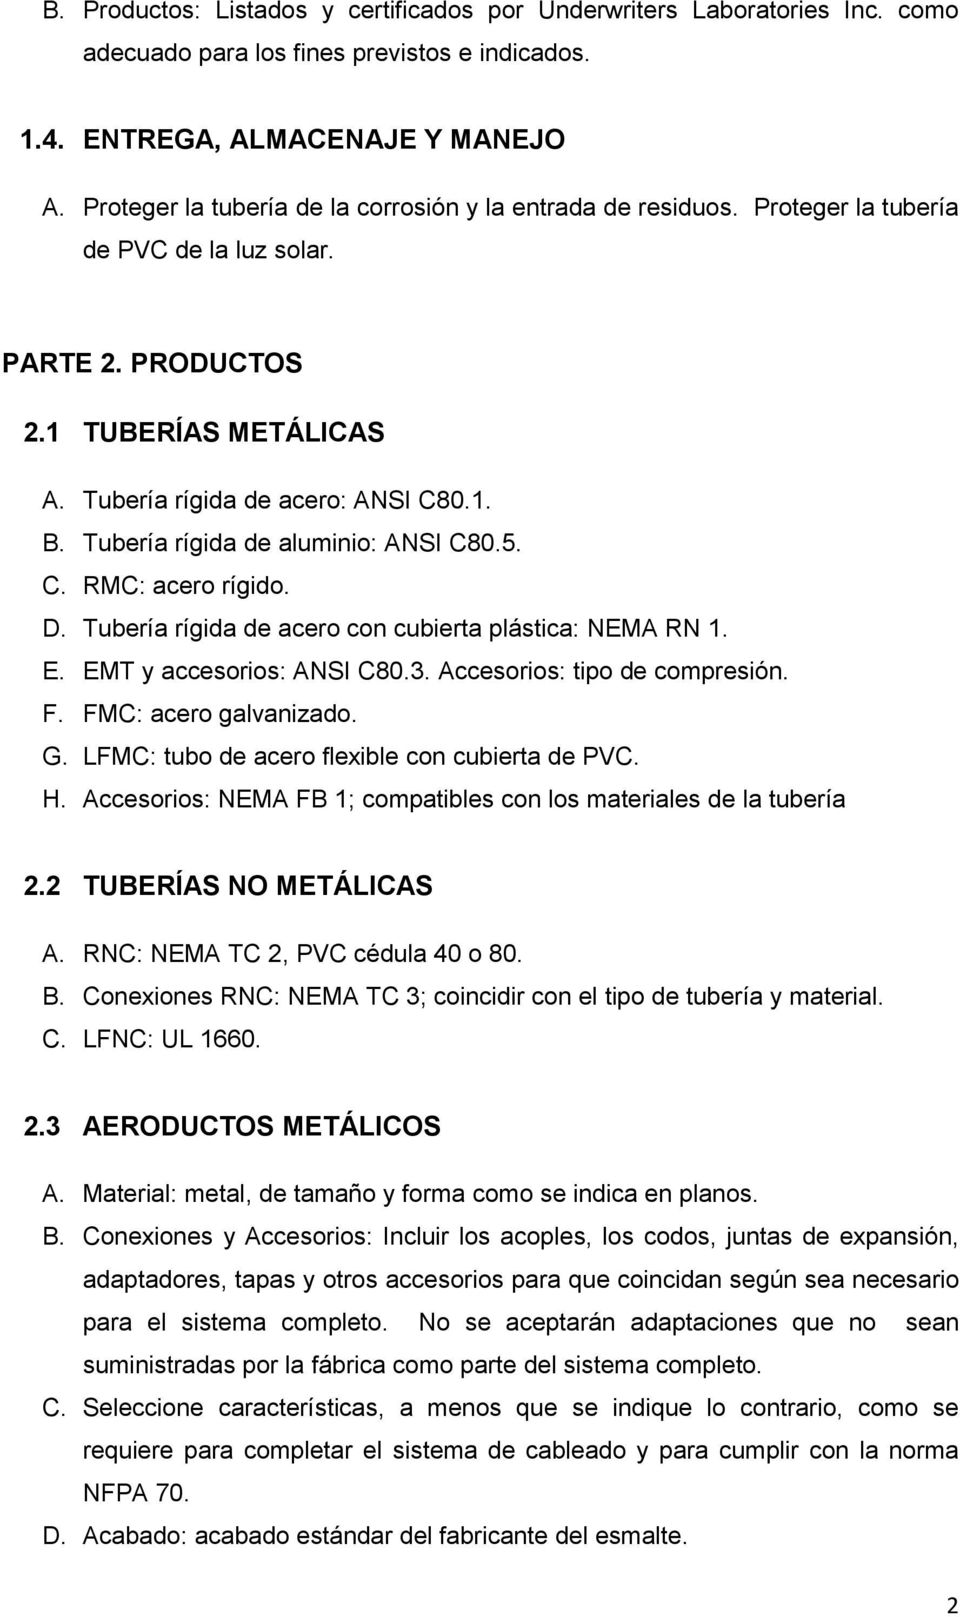 Tubería rígida de aluminio: ANSI C80.5. C. RMC: acero rígido. D. Tubería rígida de acero con cubierta plástica: NEMA RN 1. E. EMT y accesorios: ANSI C80.3. Accesorios: tipo de compresión. F.